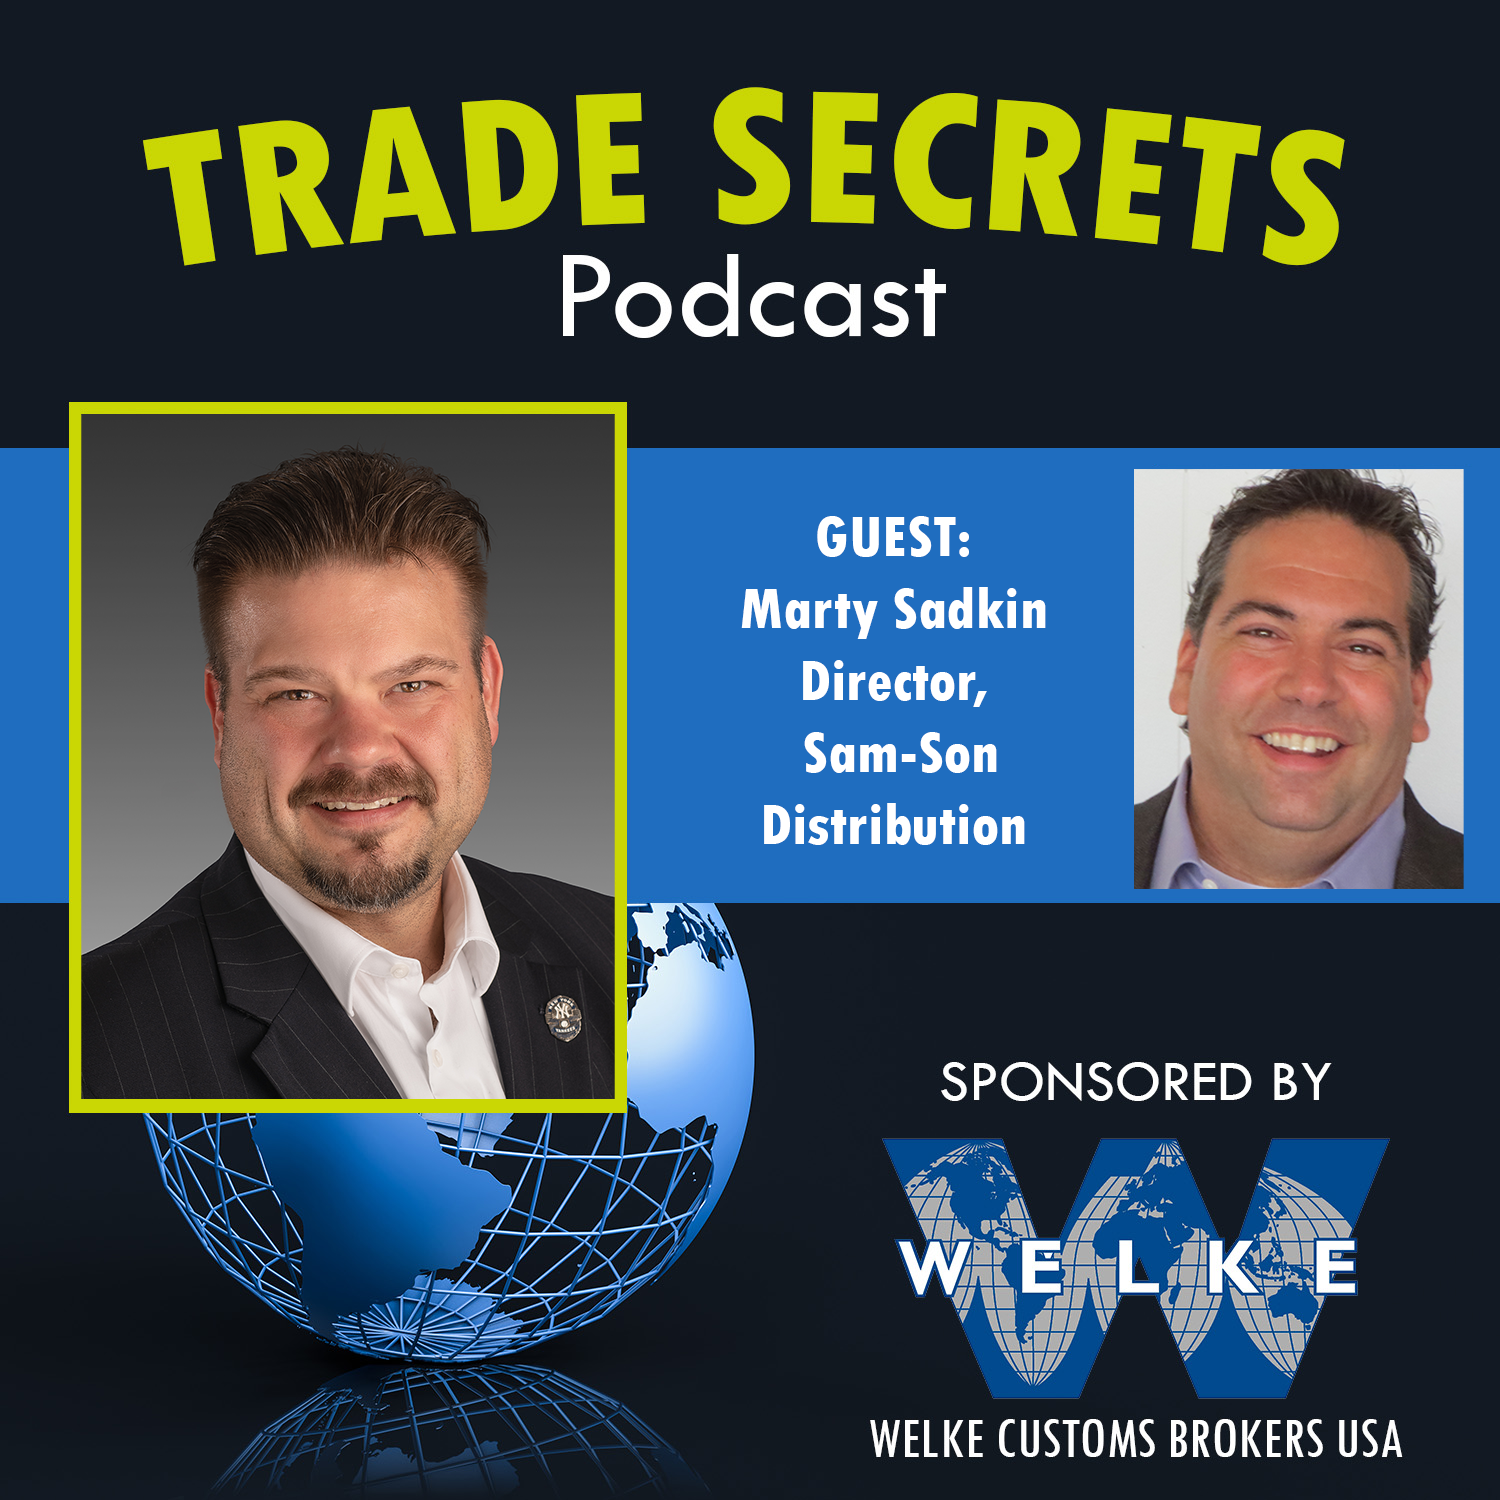 Trade Secrets - Episode 14 Marty Sadkin Director, Sam-Son Distribution